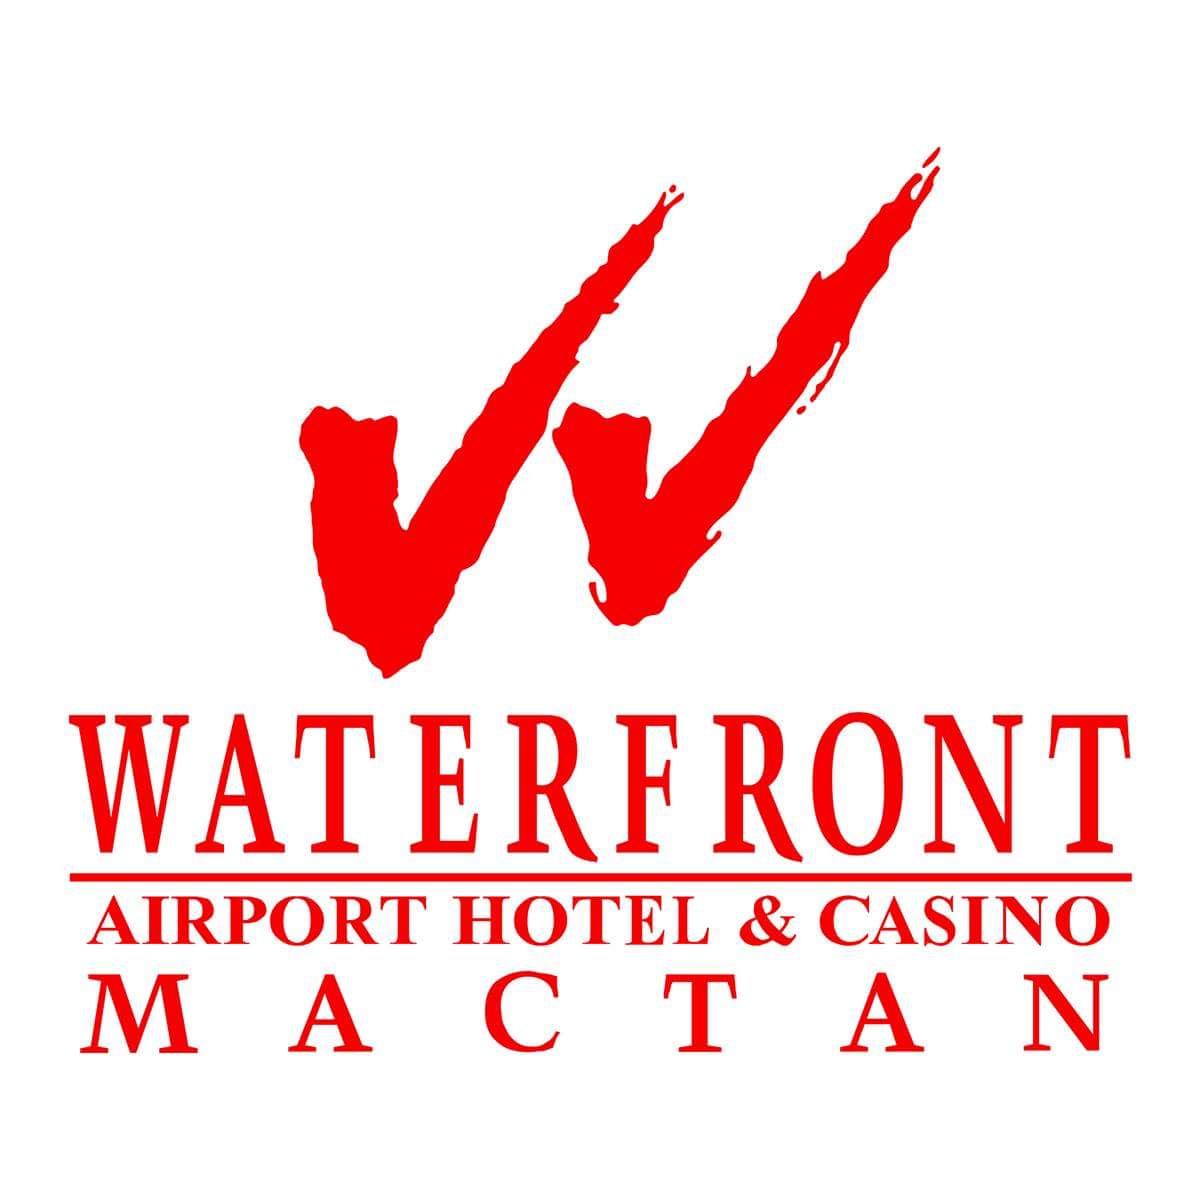 Waterfront Airport Hotel and Casino Mactan (1)